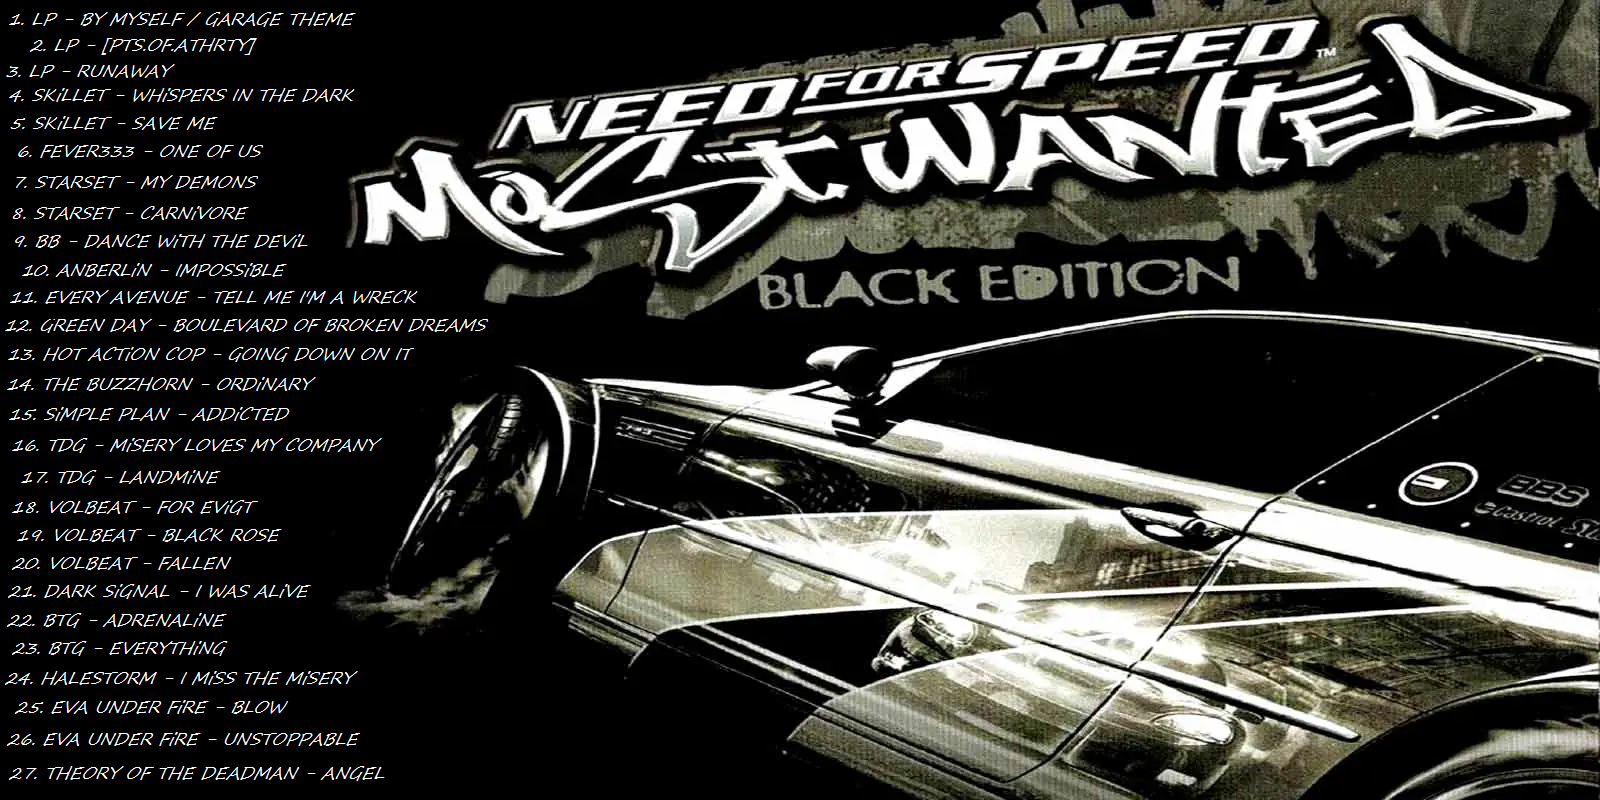 Песни из игры need for. NFS most wanted 2005 диск. Диск нид фор СПИД мост вантед 2005. Постер нфс мост вантед 2005. Need for Speed most wanted Black Edition диск.